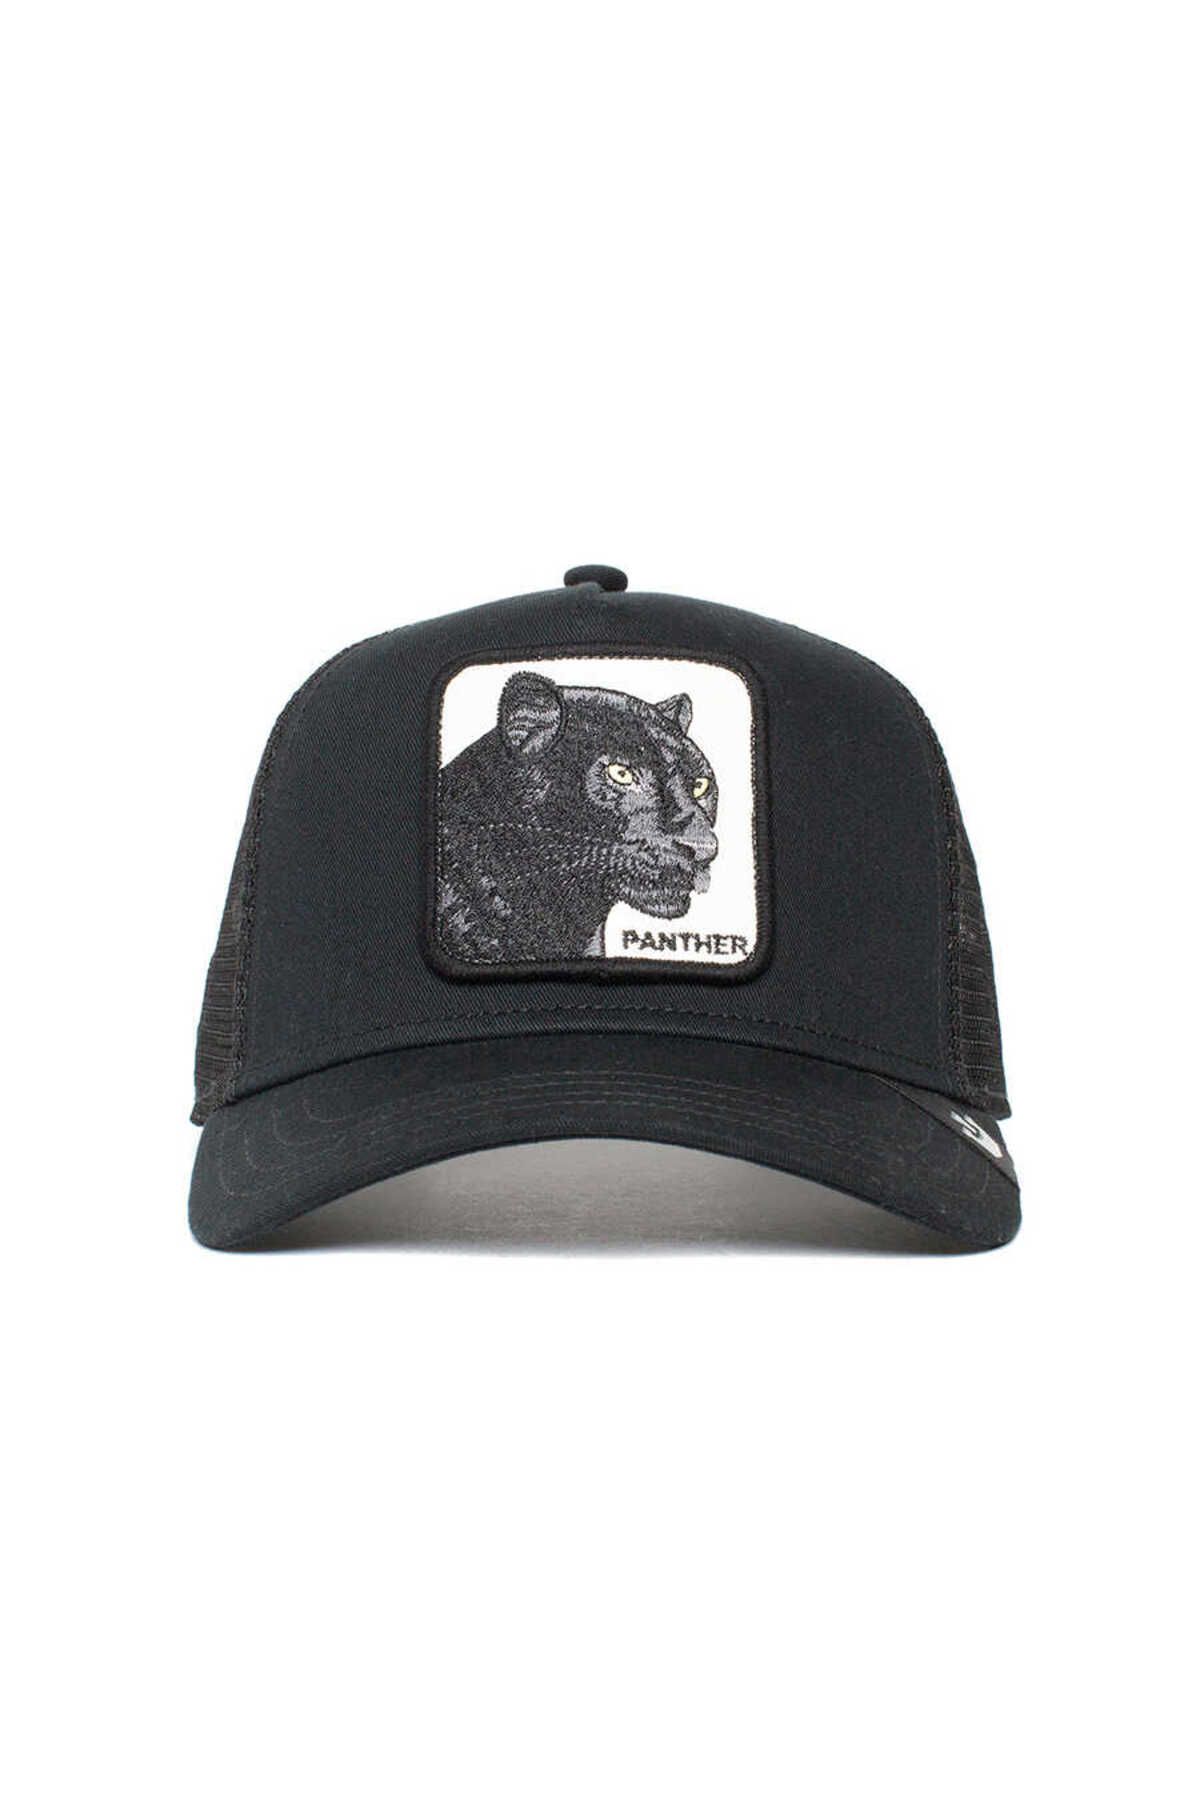 Goorin Bros The Panther ( Panter Figür ) Unisex Şapka 101-0381 Yeşil Standart